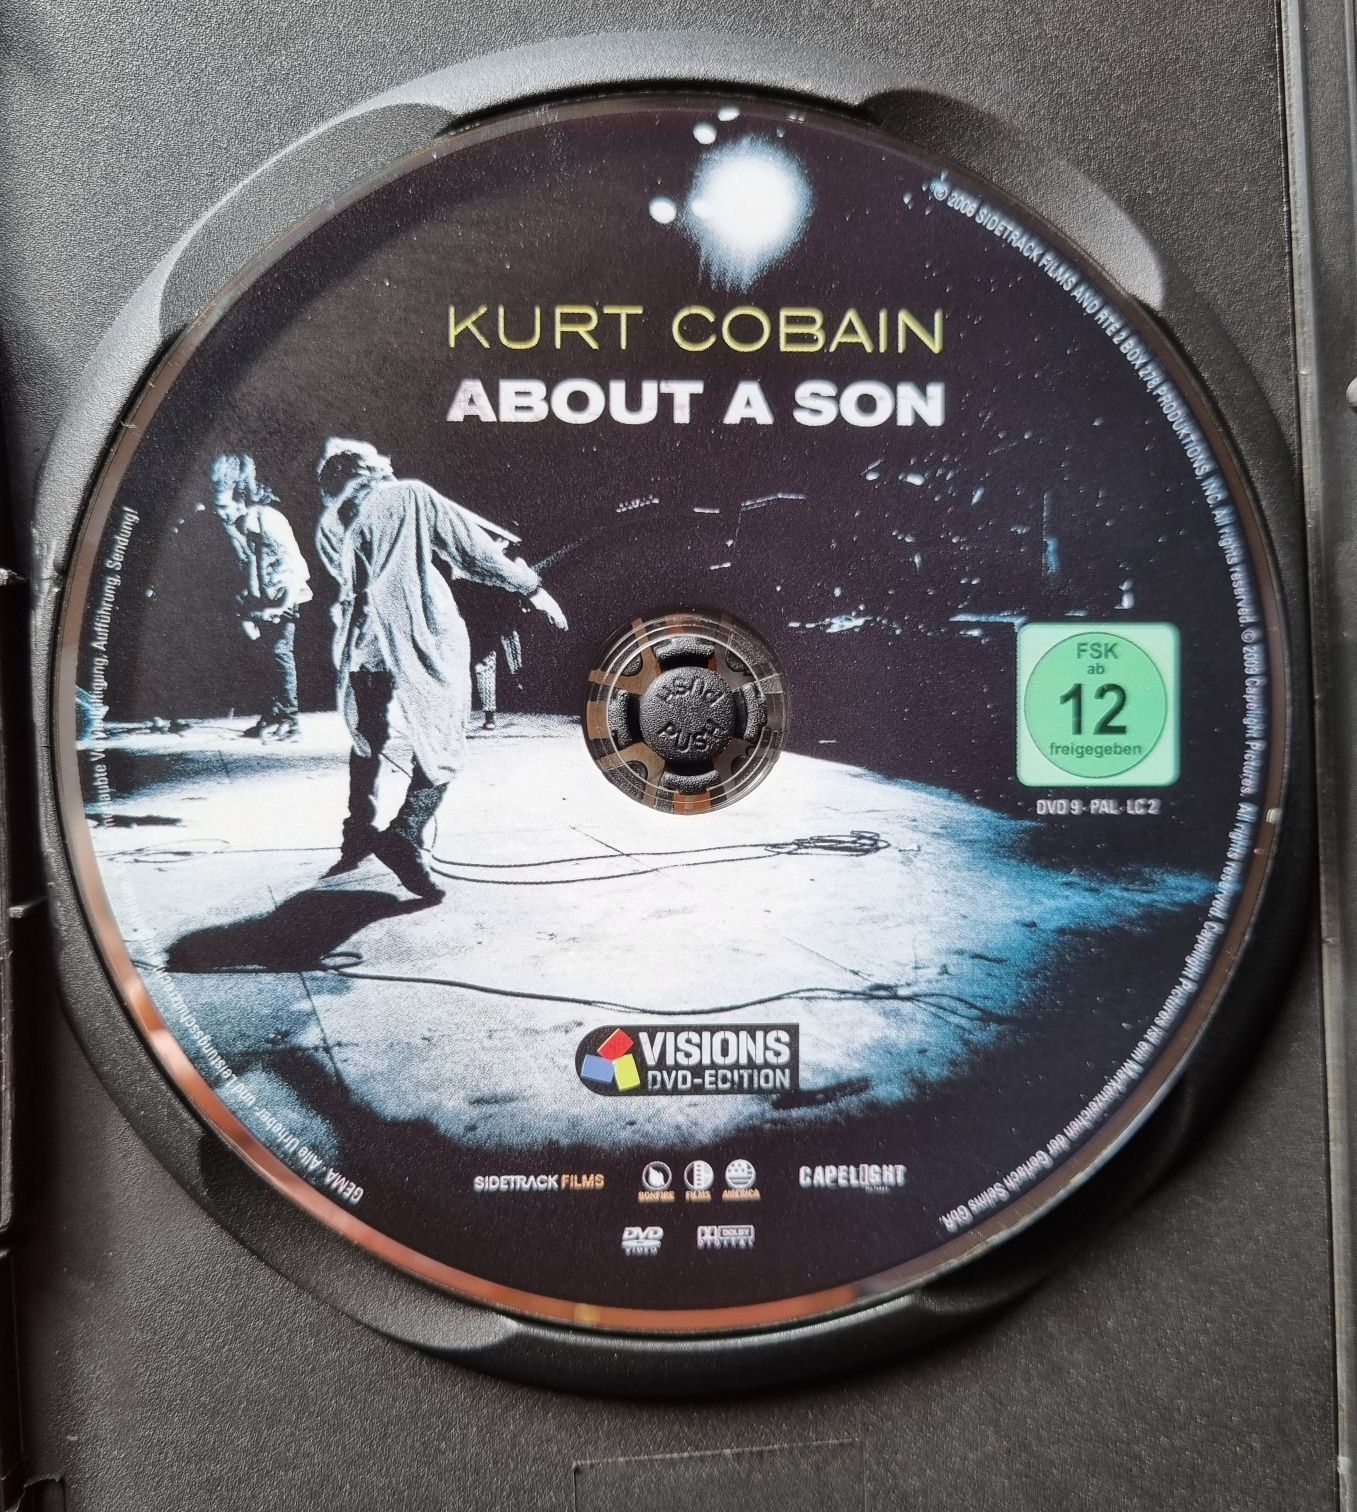 Kurt Cobain. About a son DVD, Nirvana